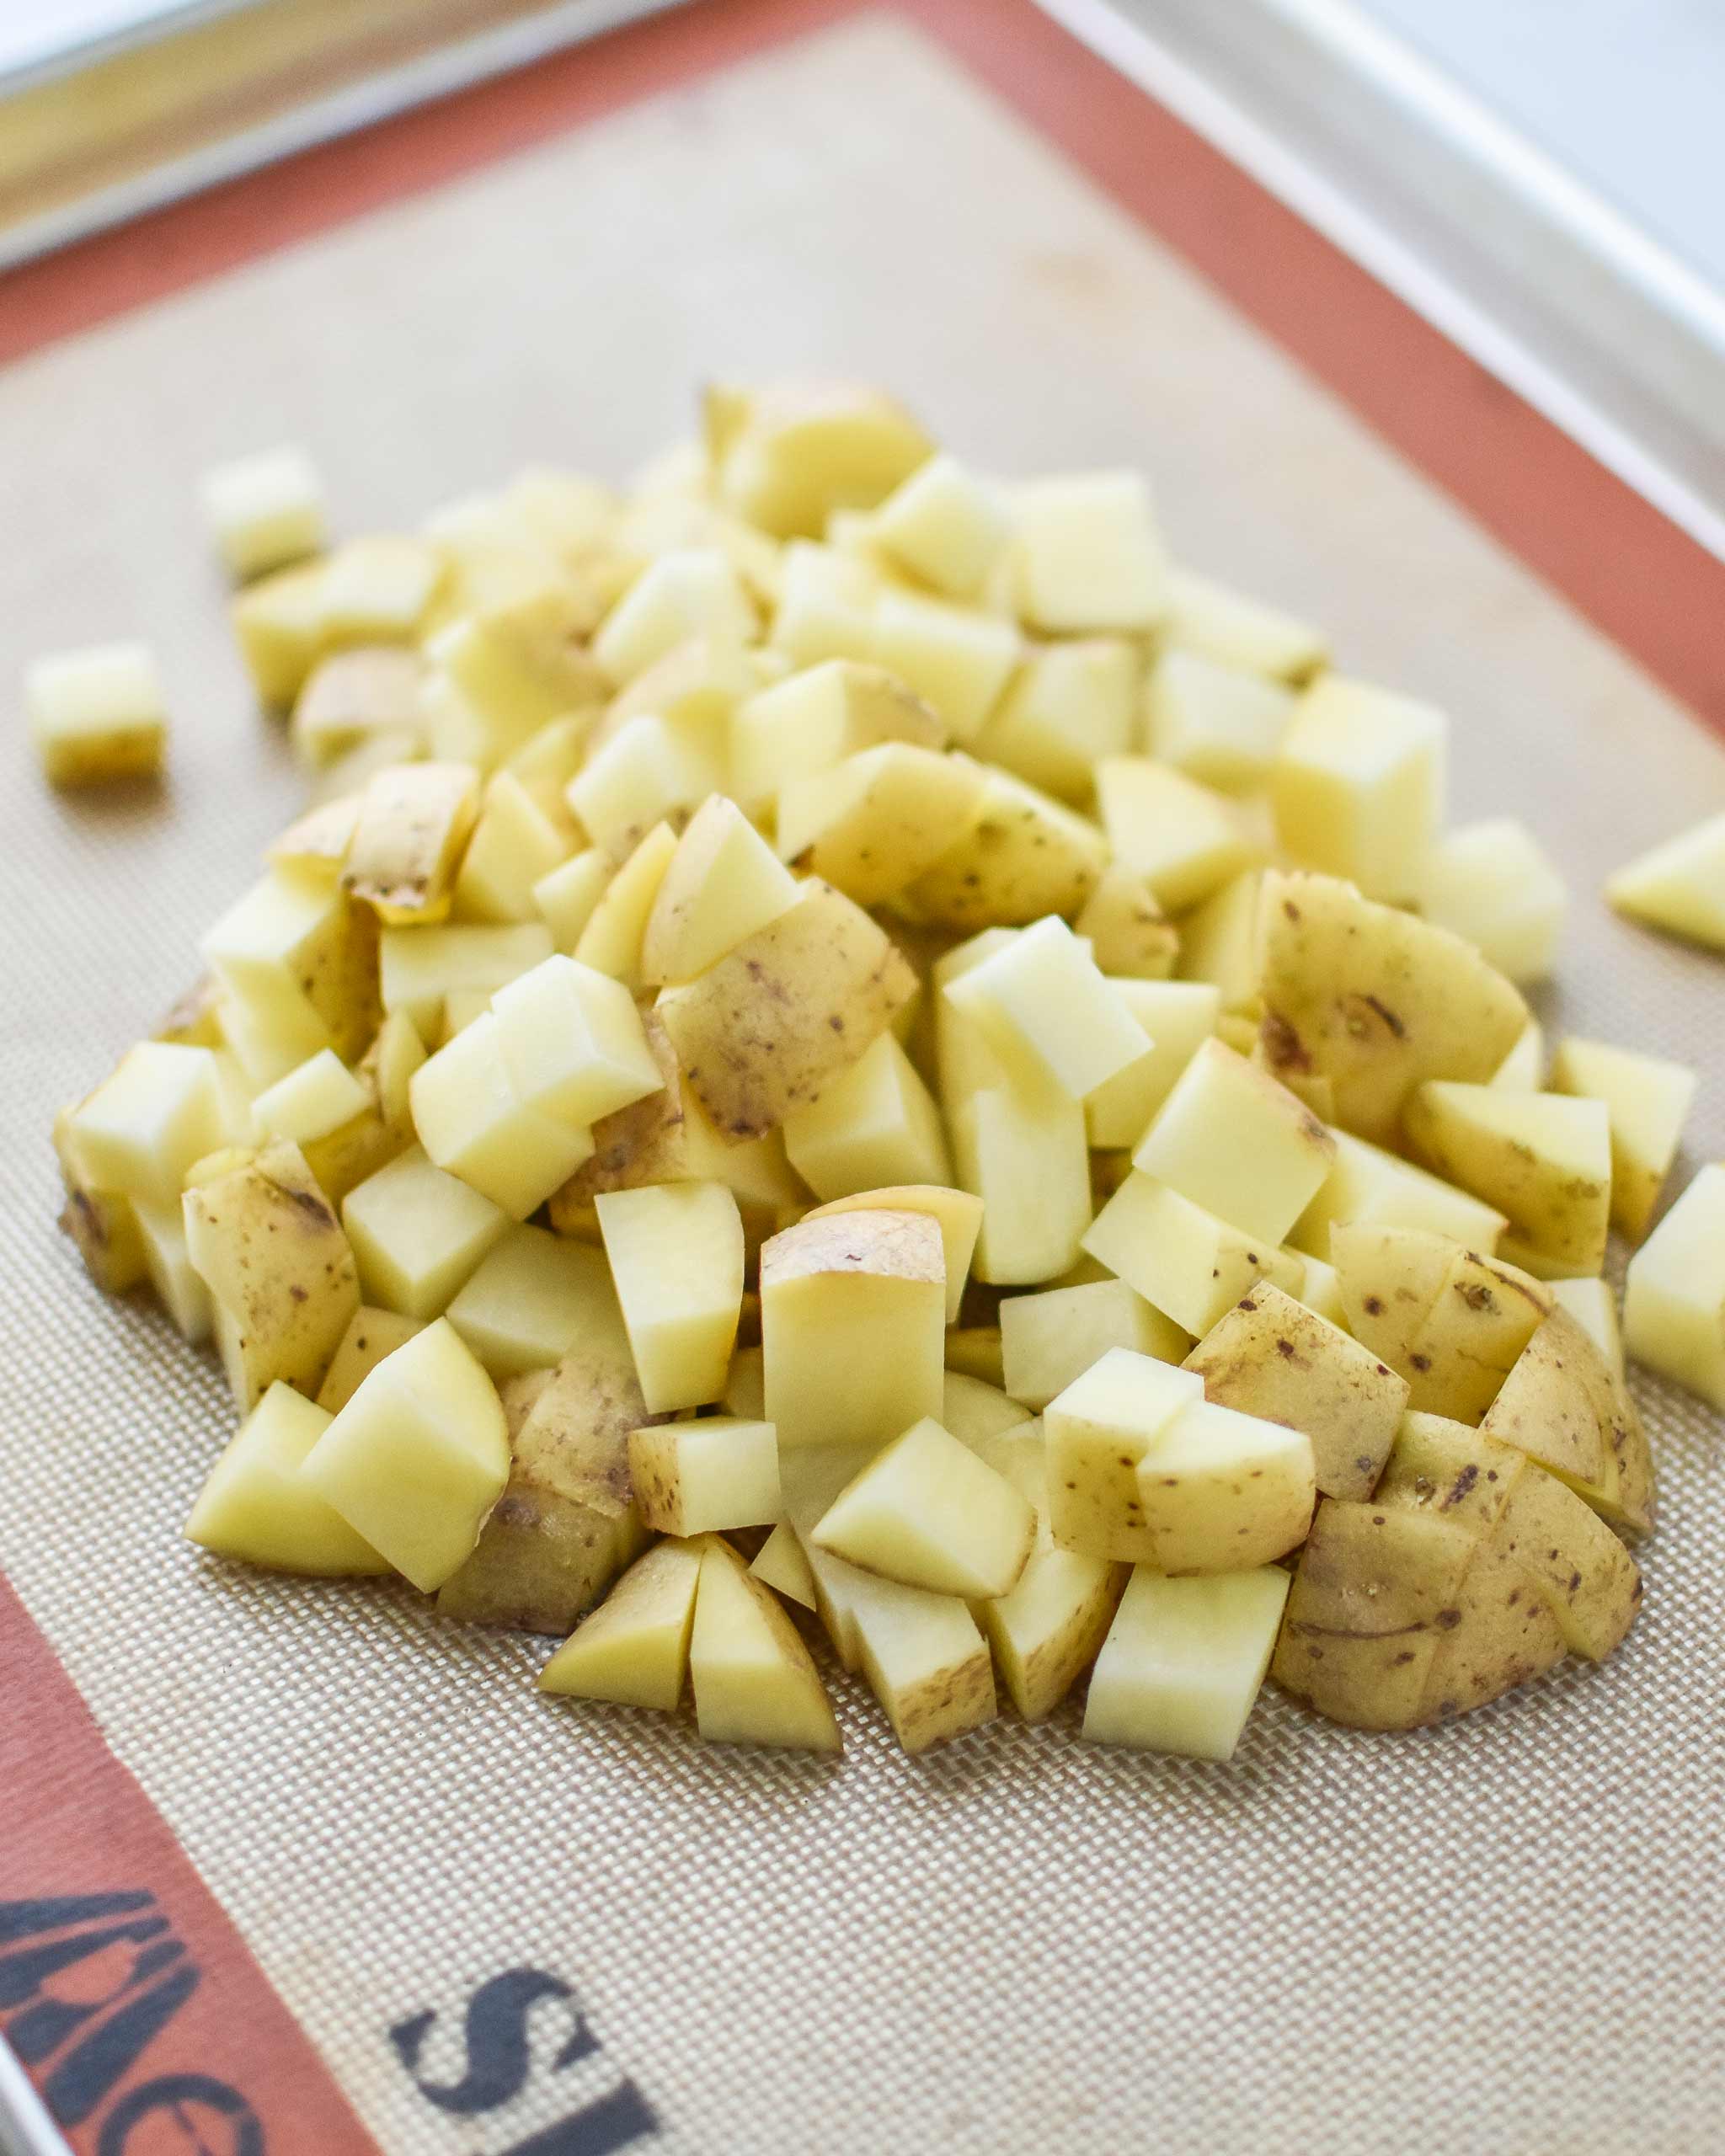 diced yukon gold potatoes on a sheet pan